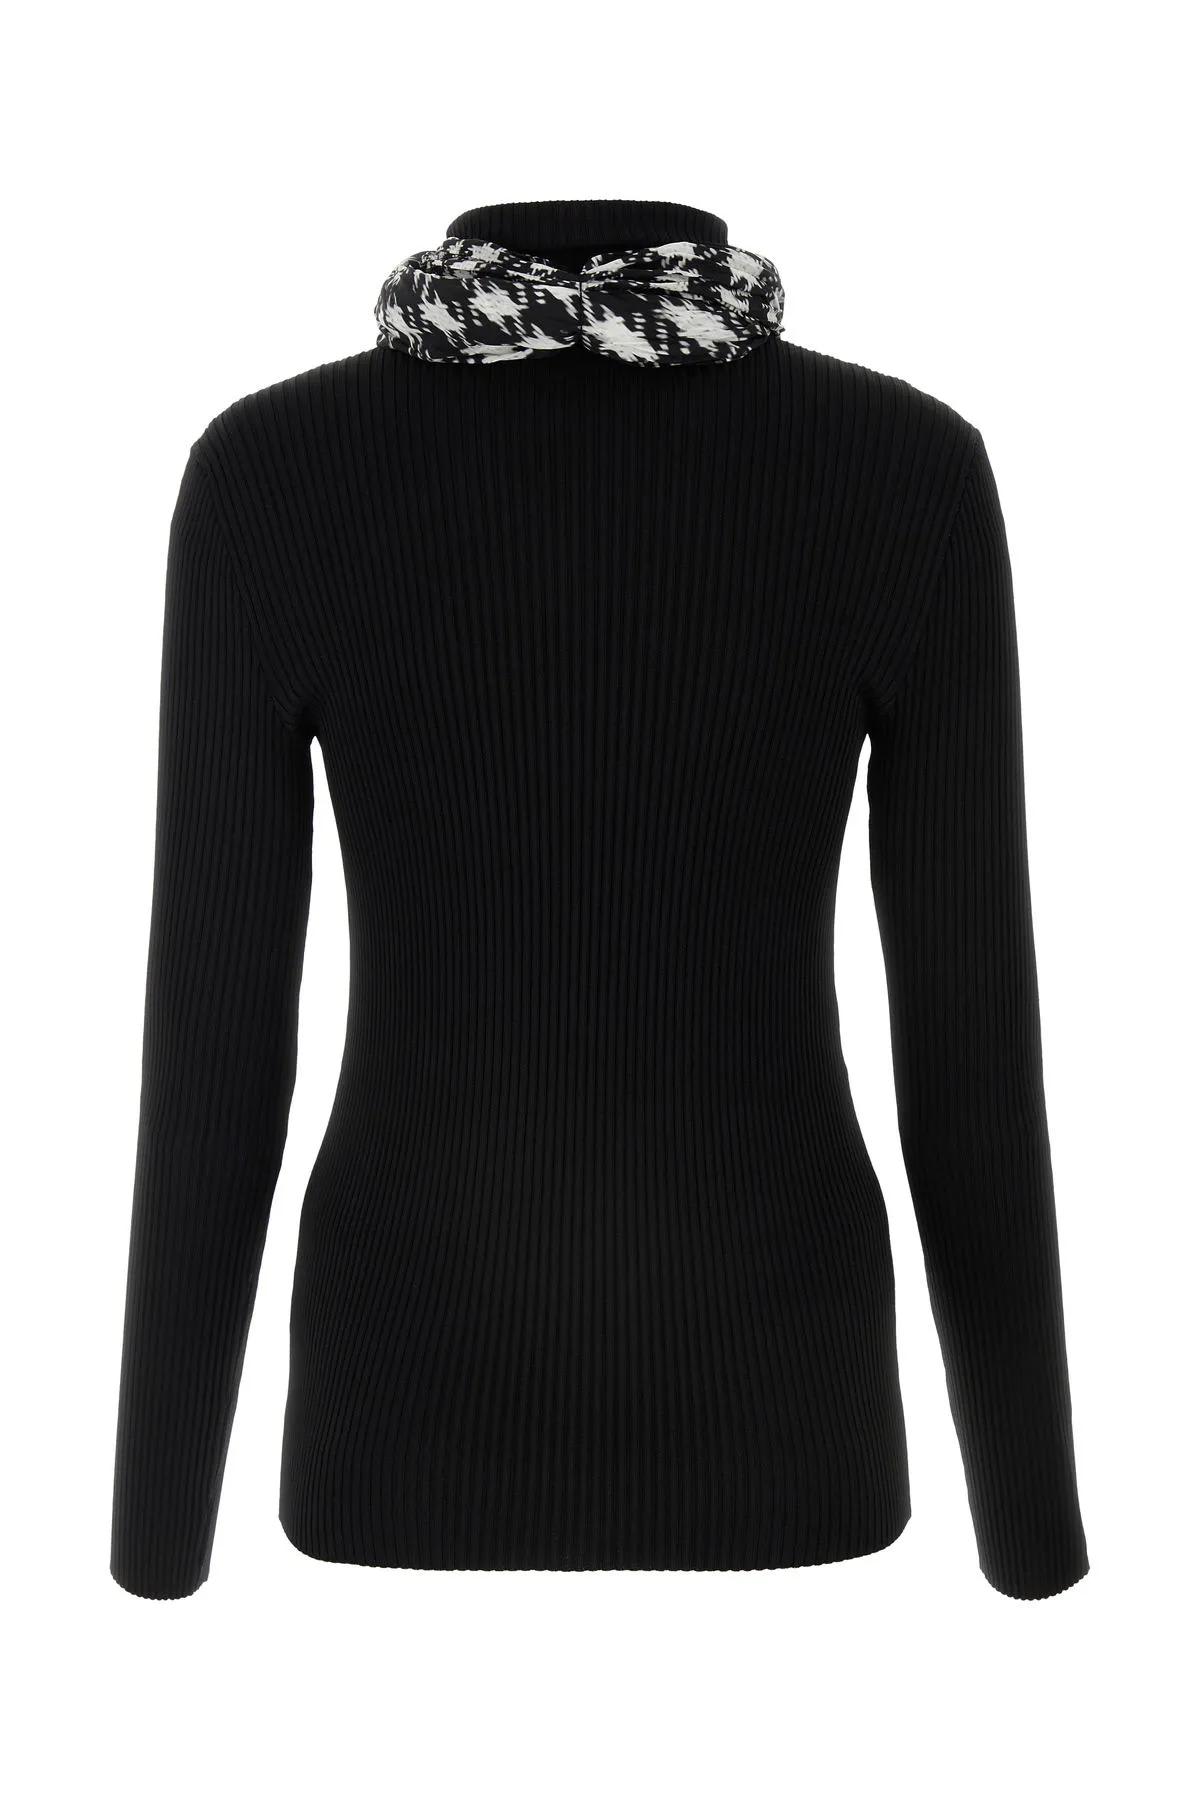 Shop Burberry Black Viscose Blend Sweater